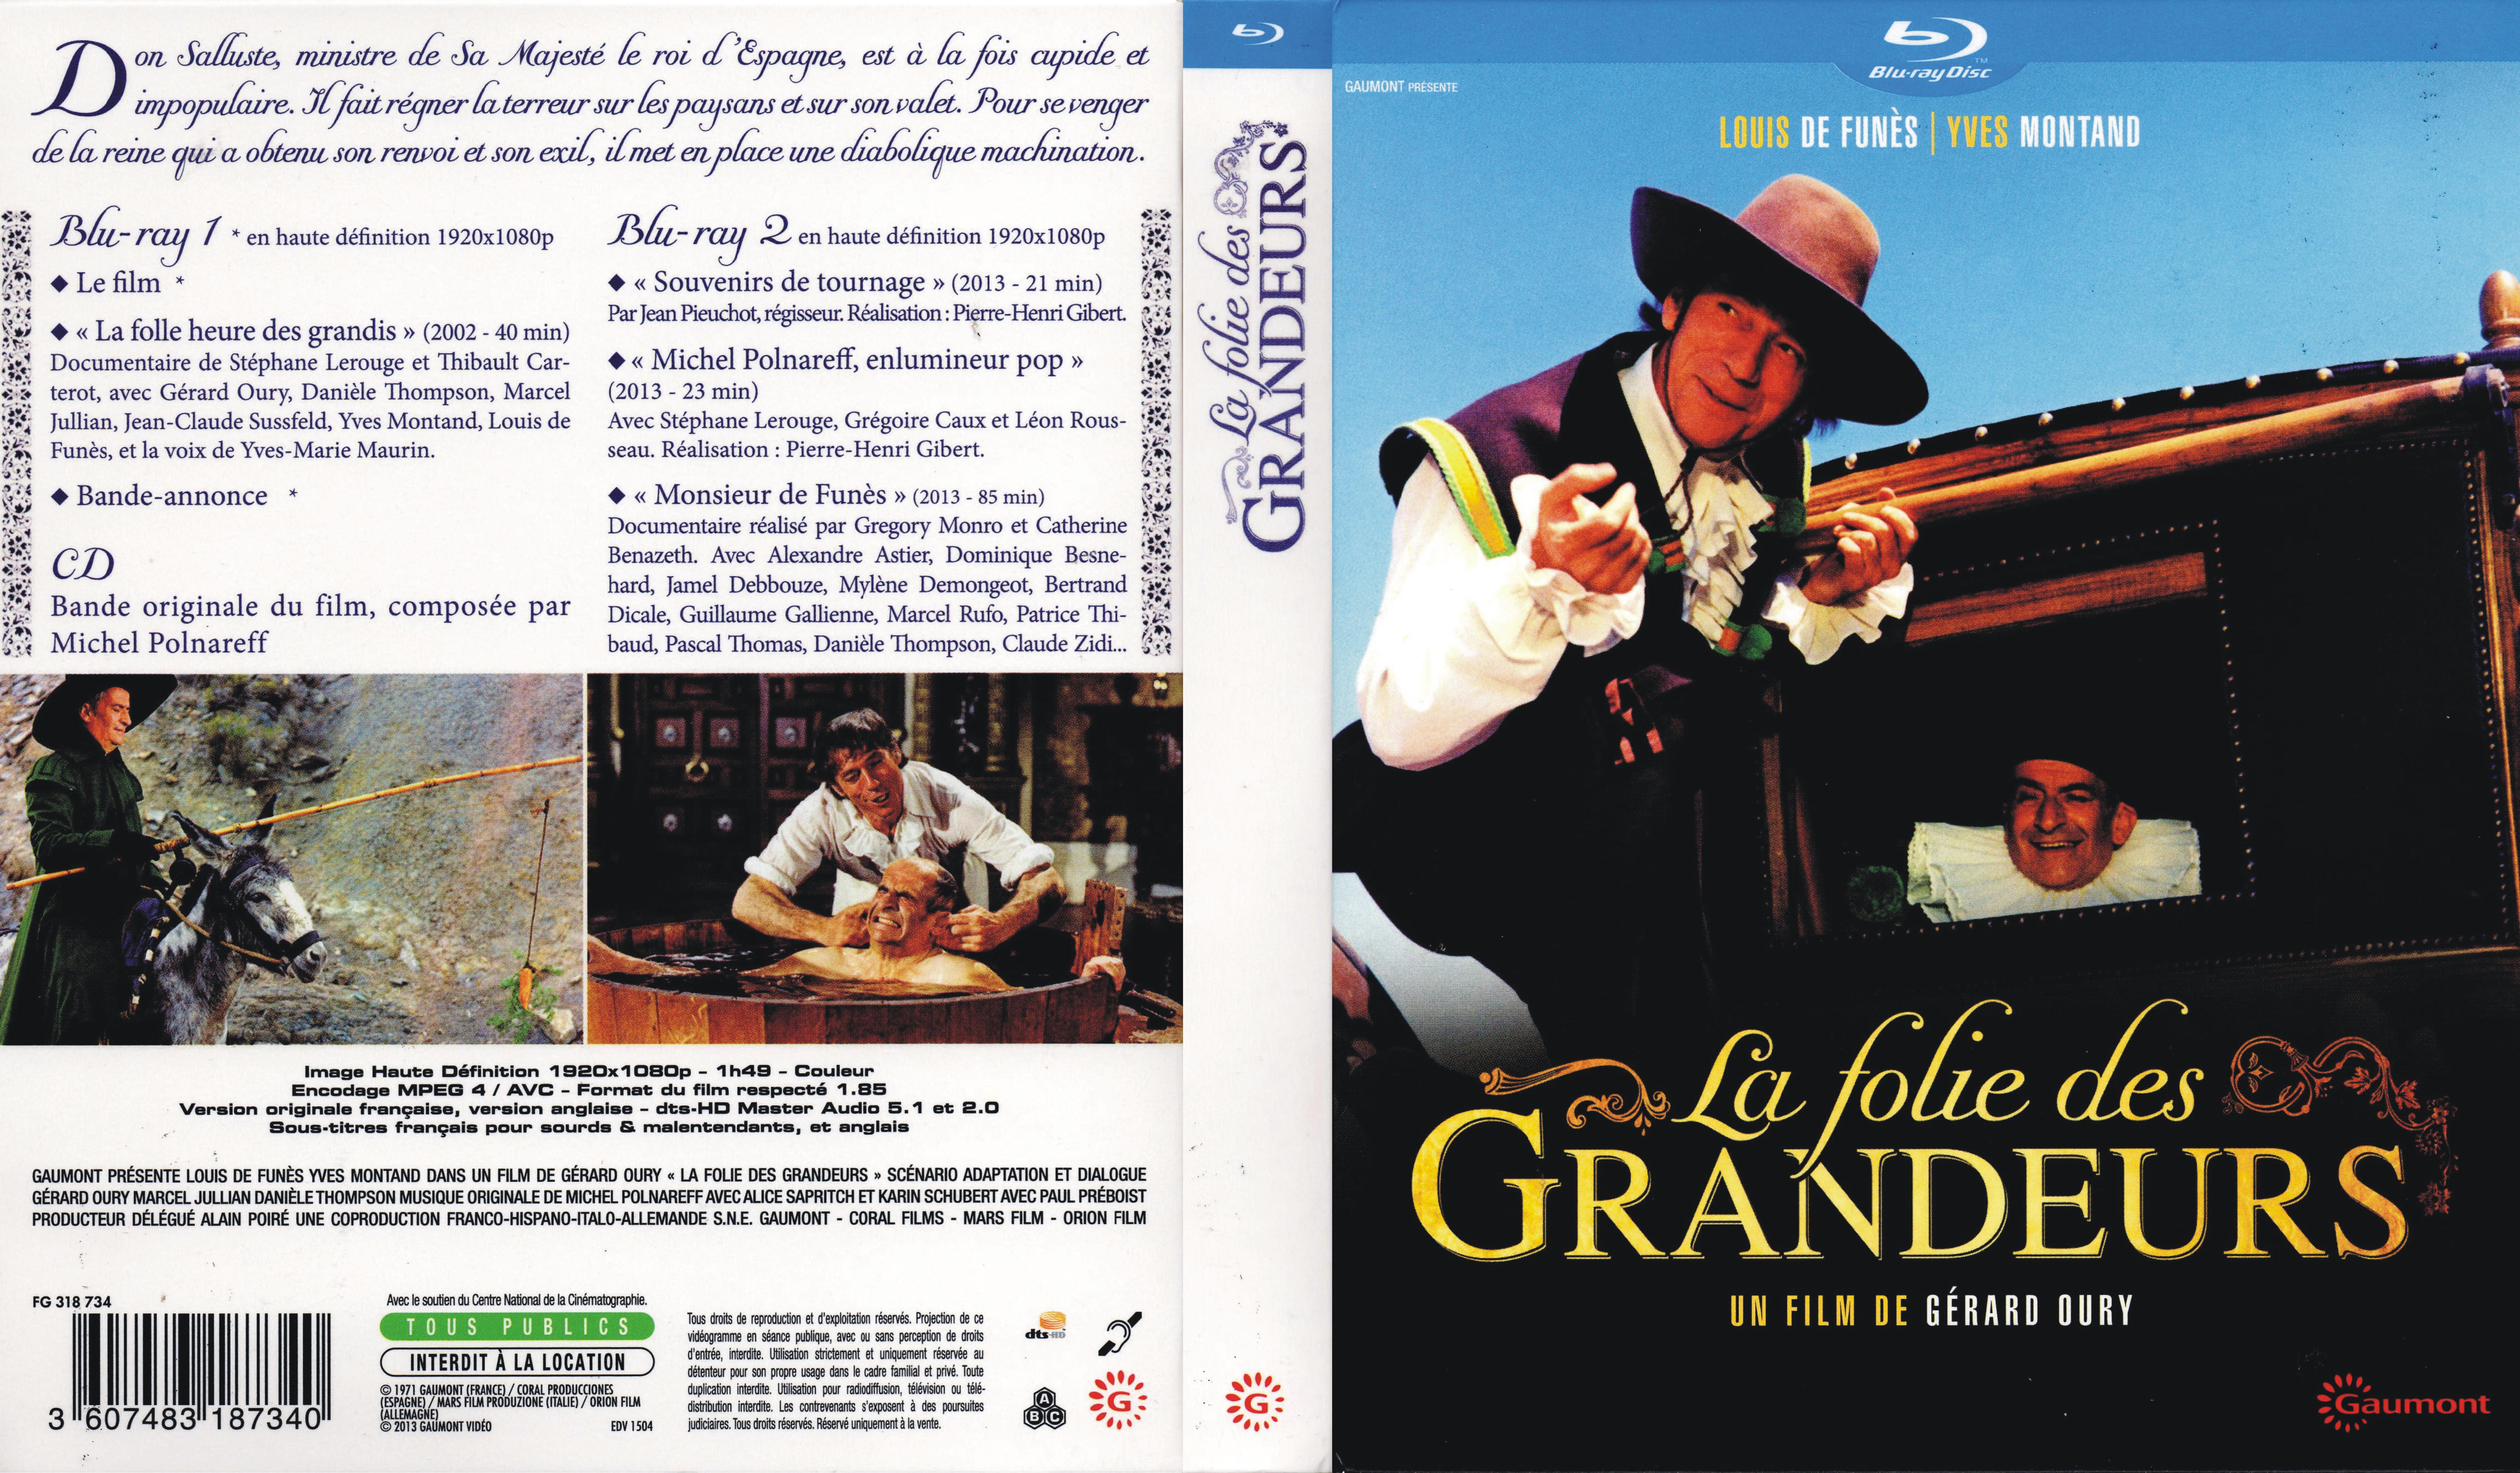 Jaquette DVD La folie des grandeurs (BLU-RAY) v2